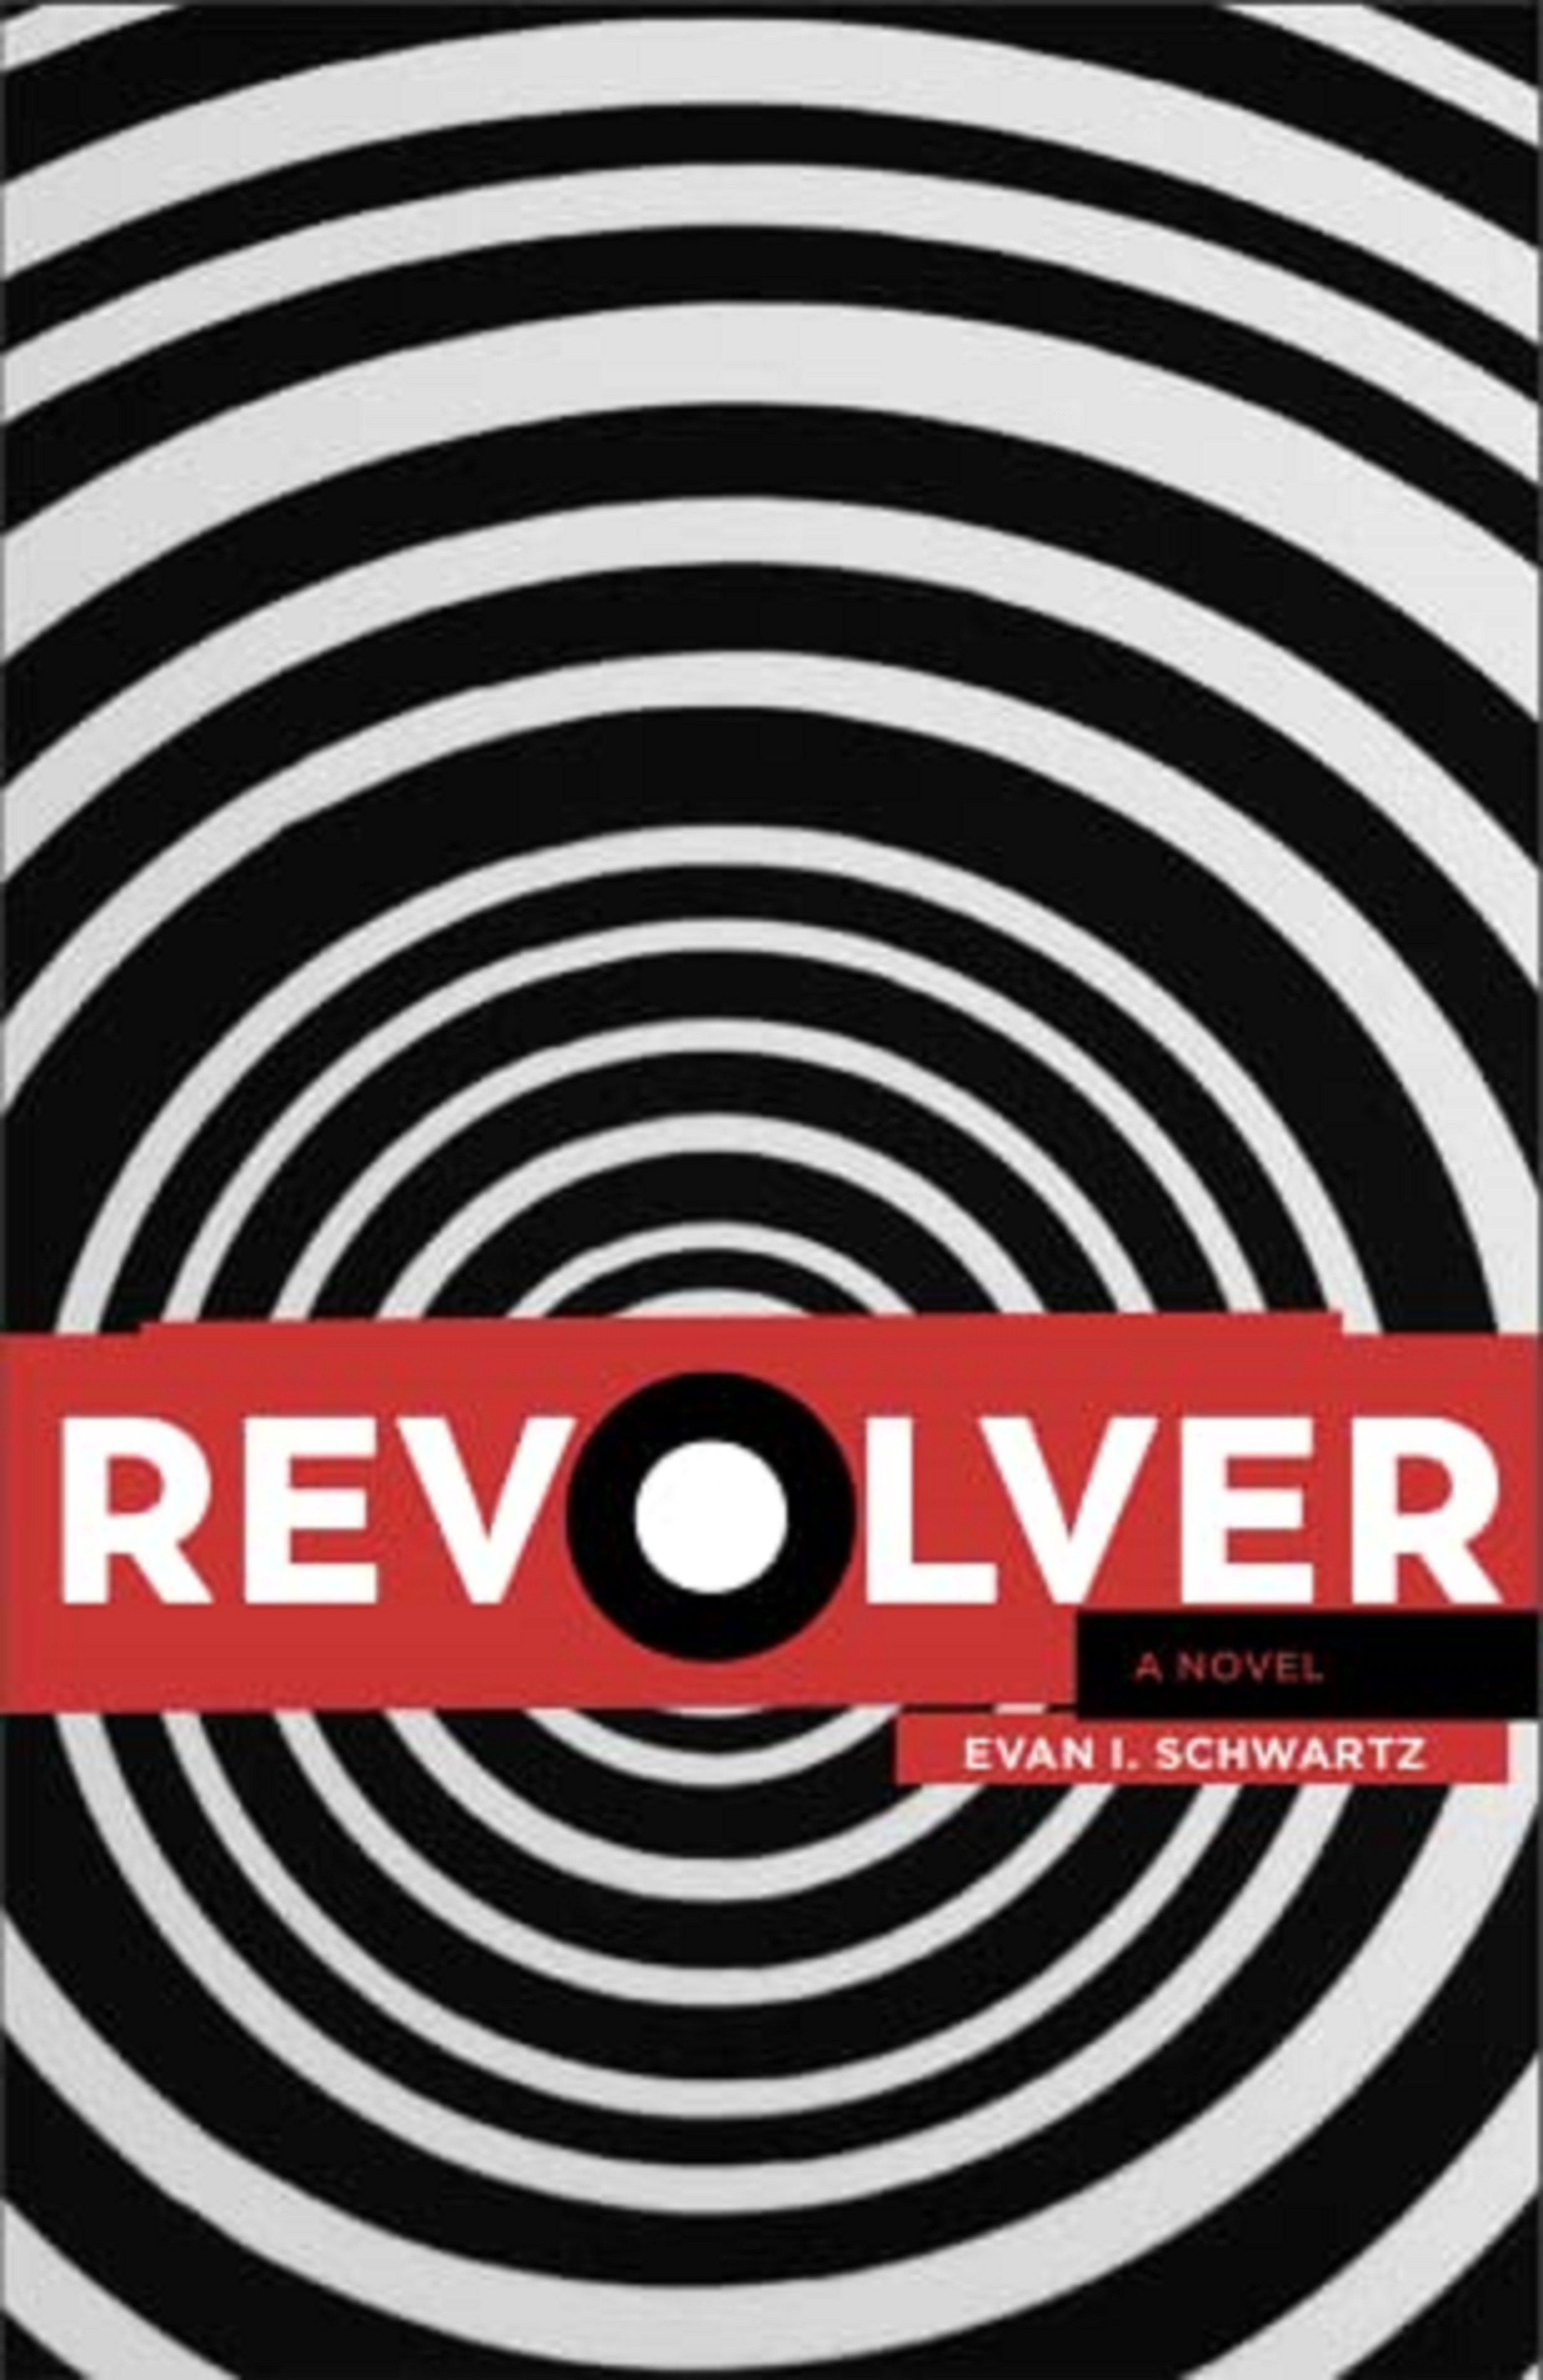 Revolver: a novel by Evan I. Schwartz | Review